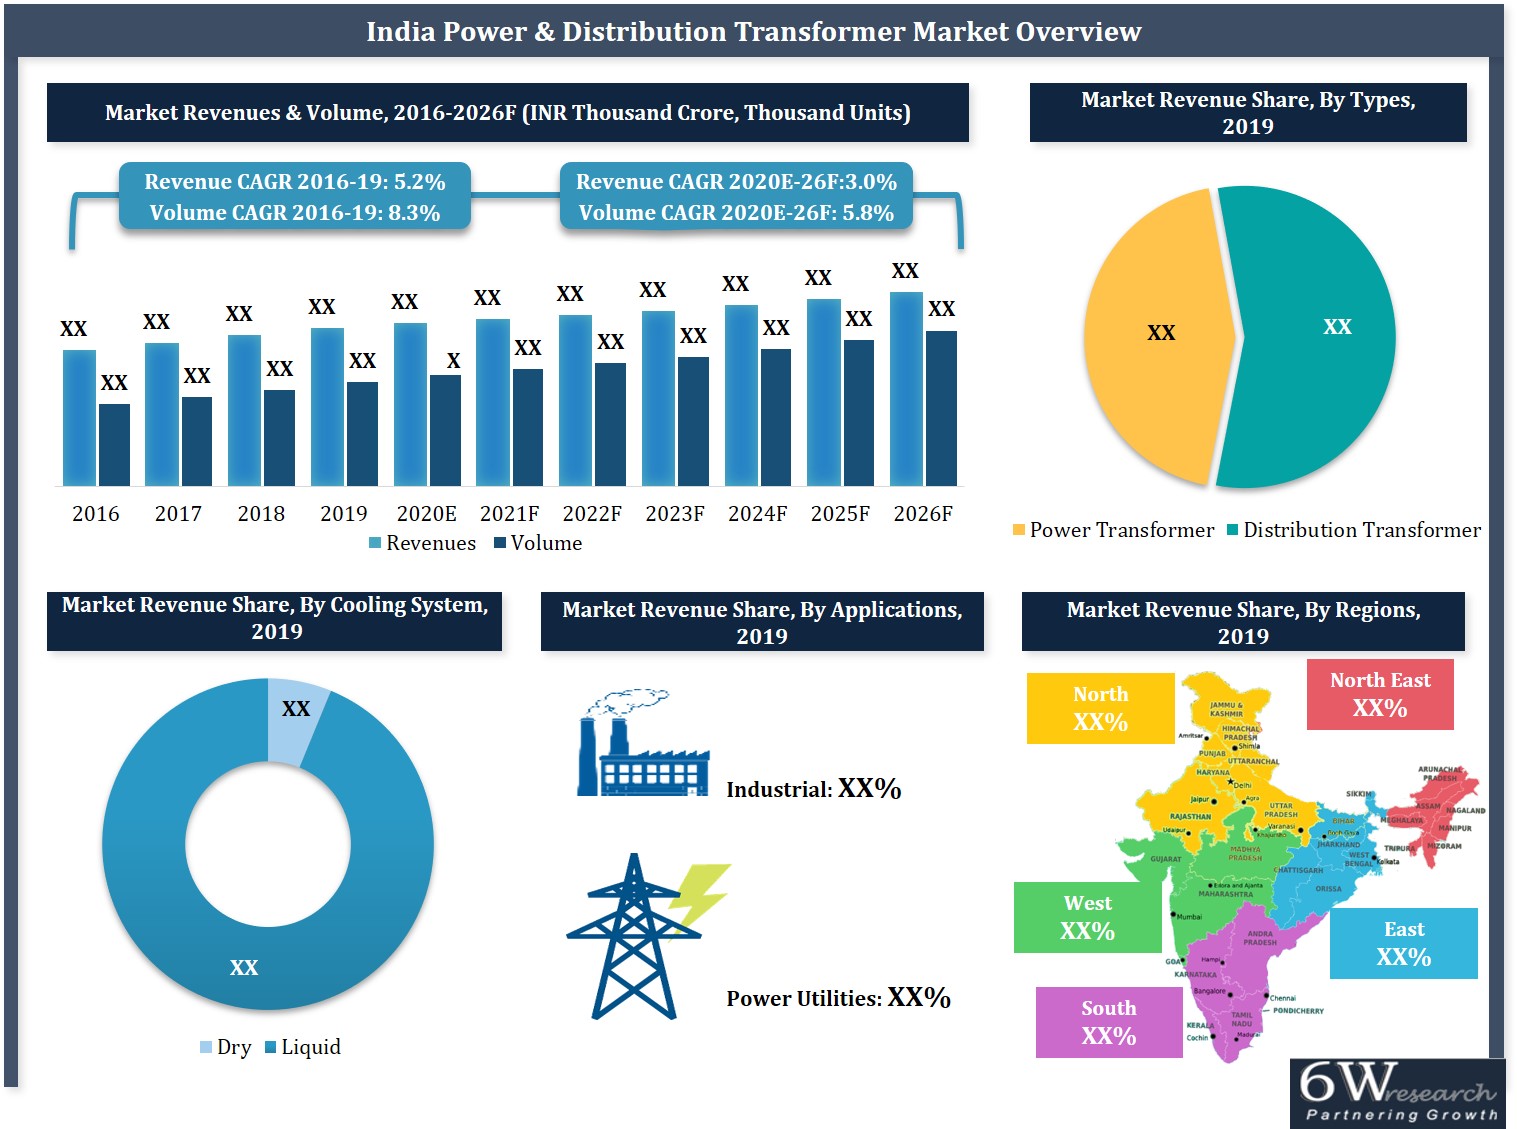 India Power & Distribution Transformer Market